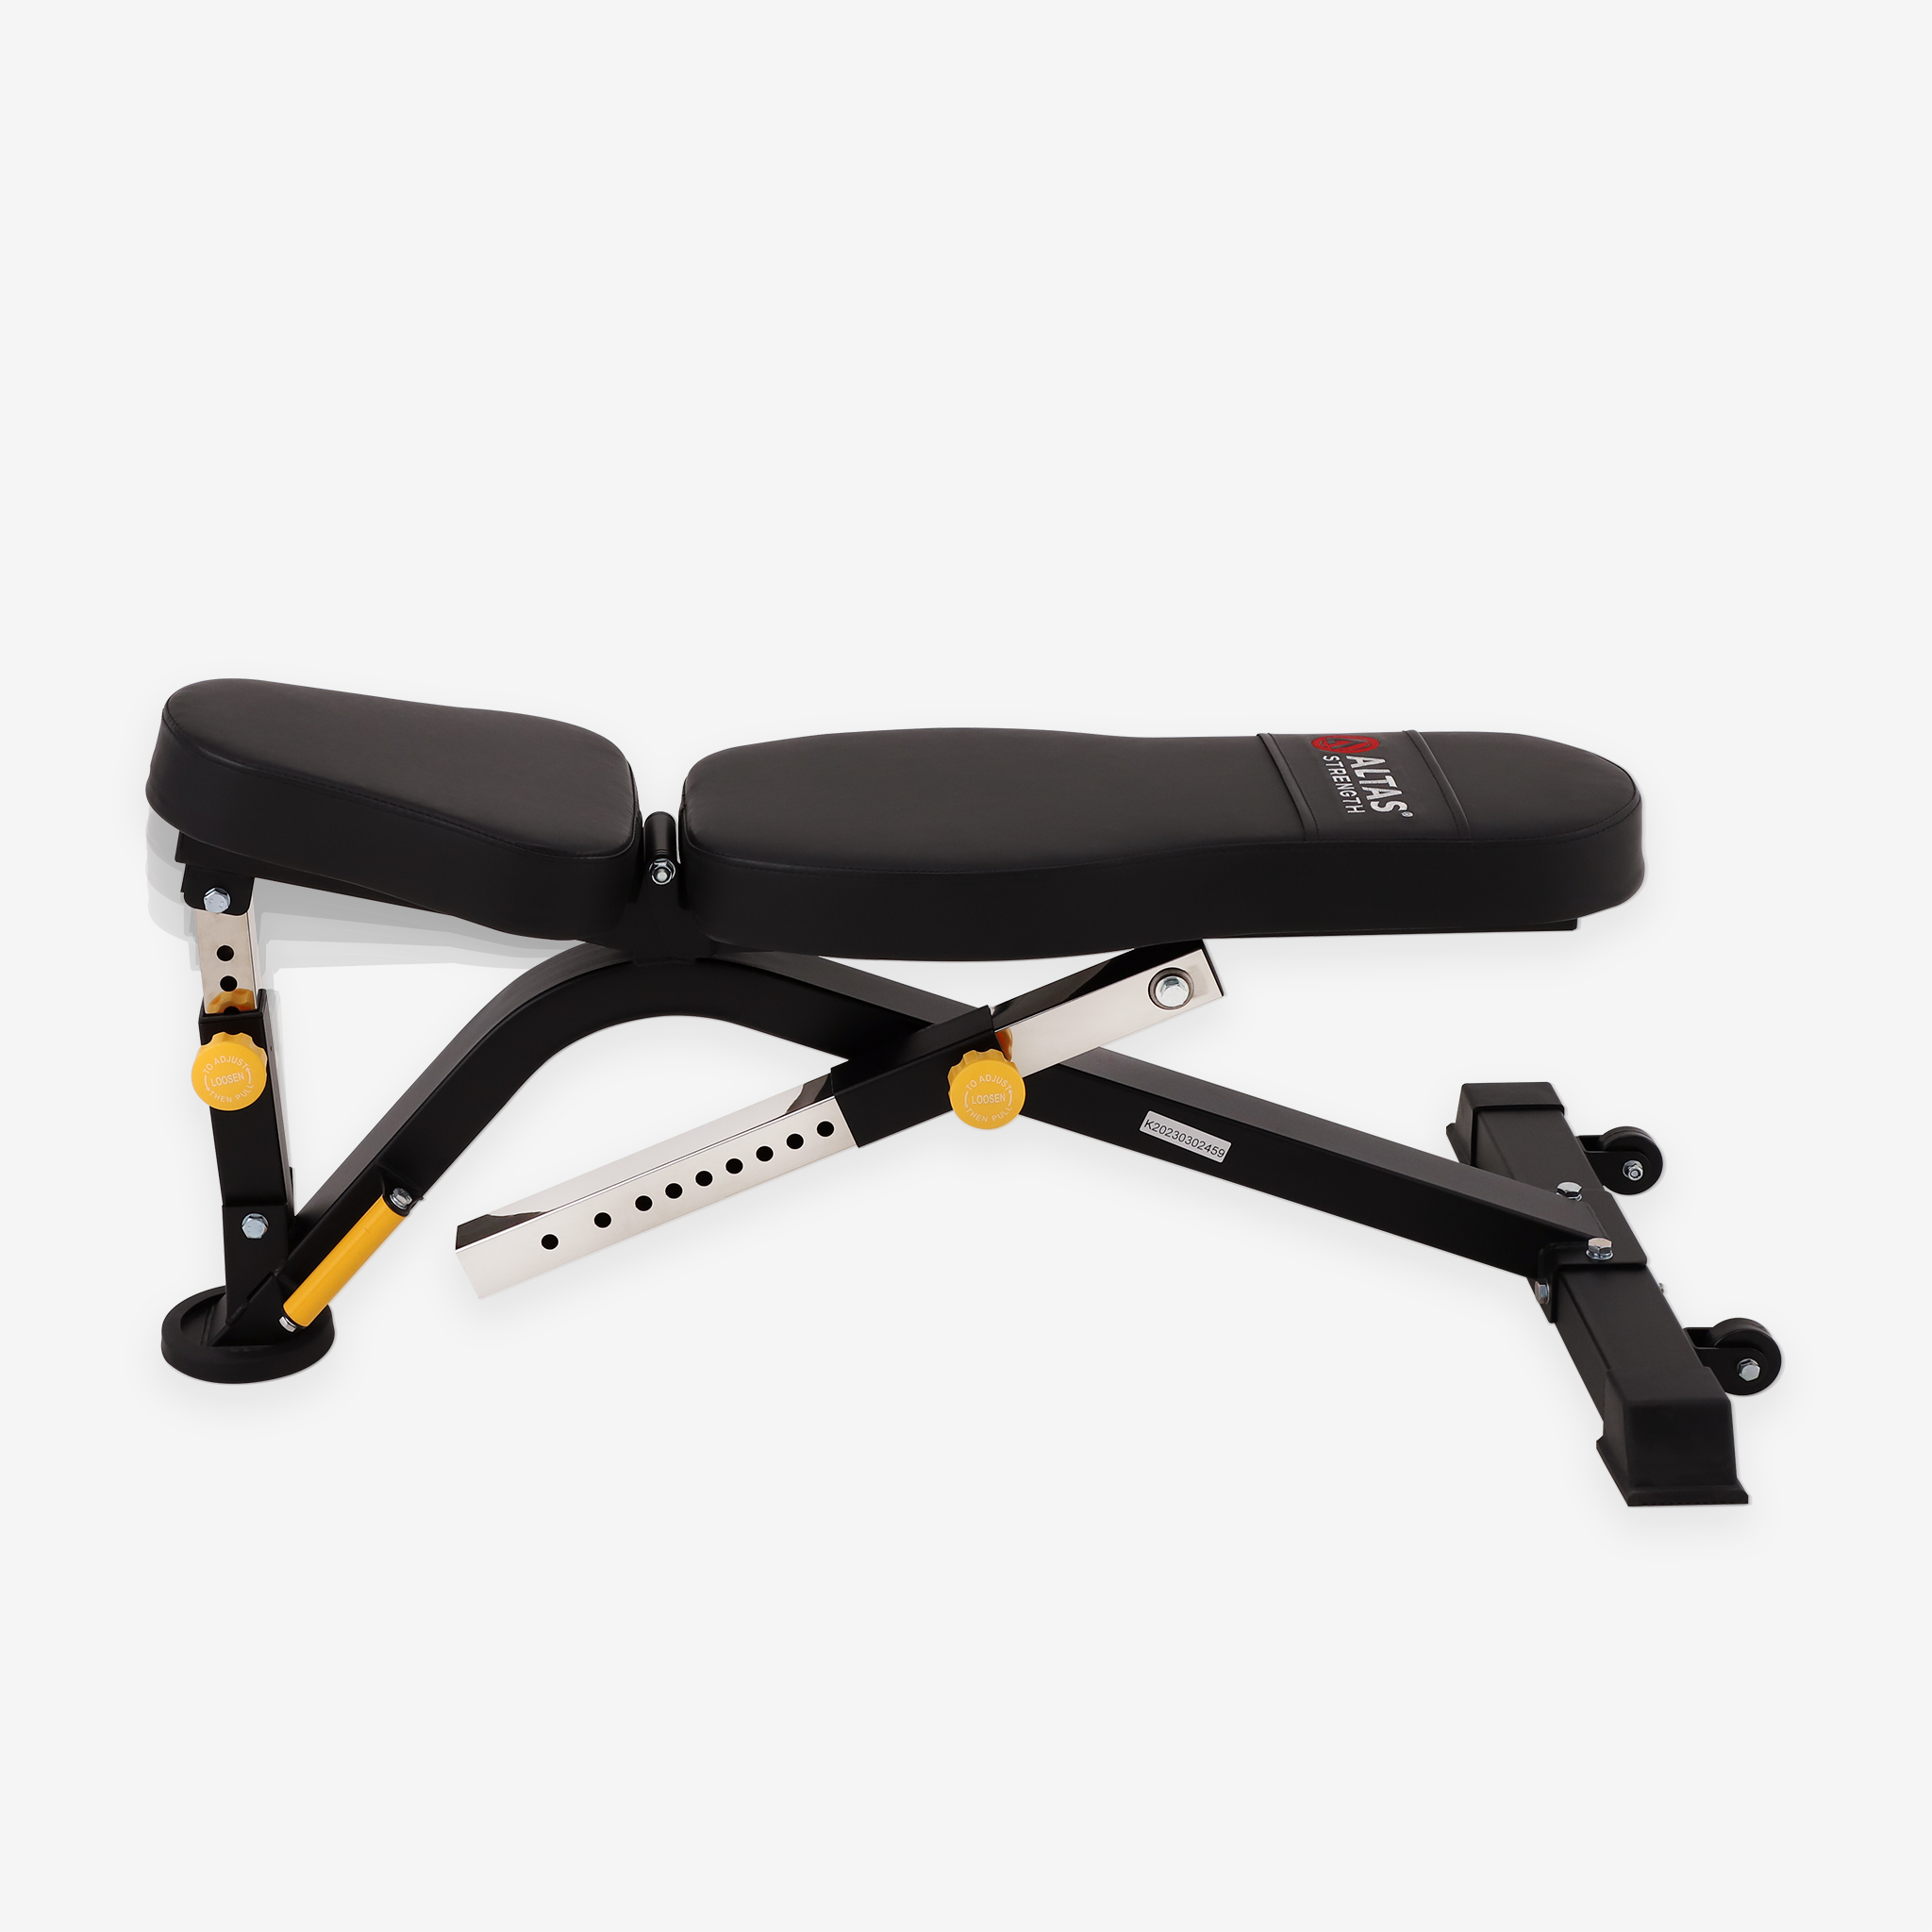 Altas Strength Home Gym Workout Adjustable Bench AL-4006